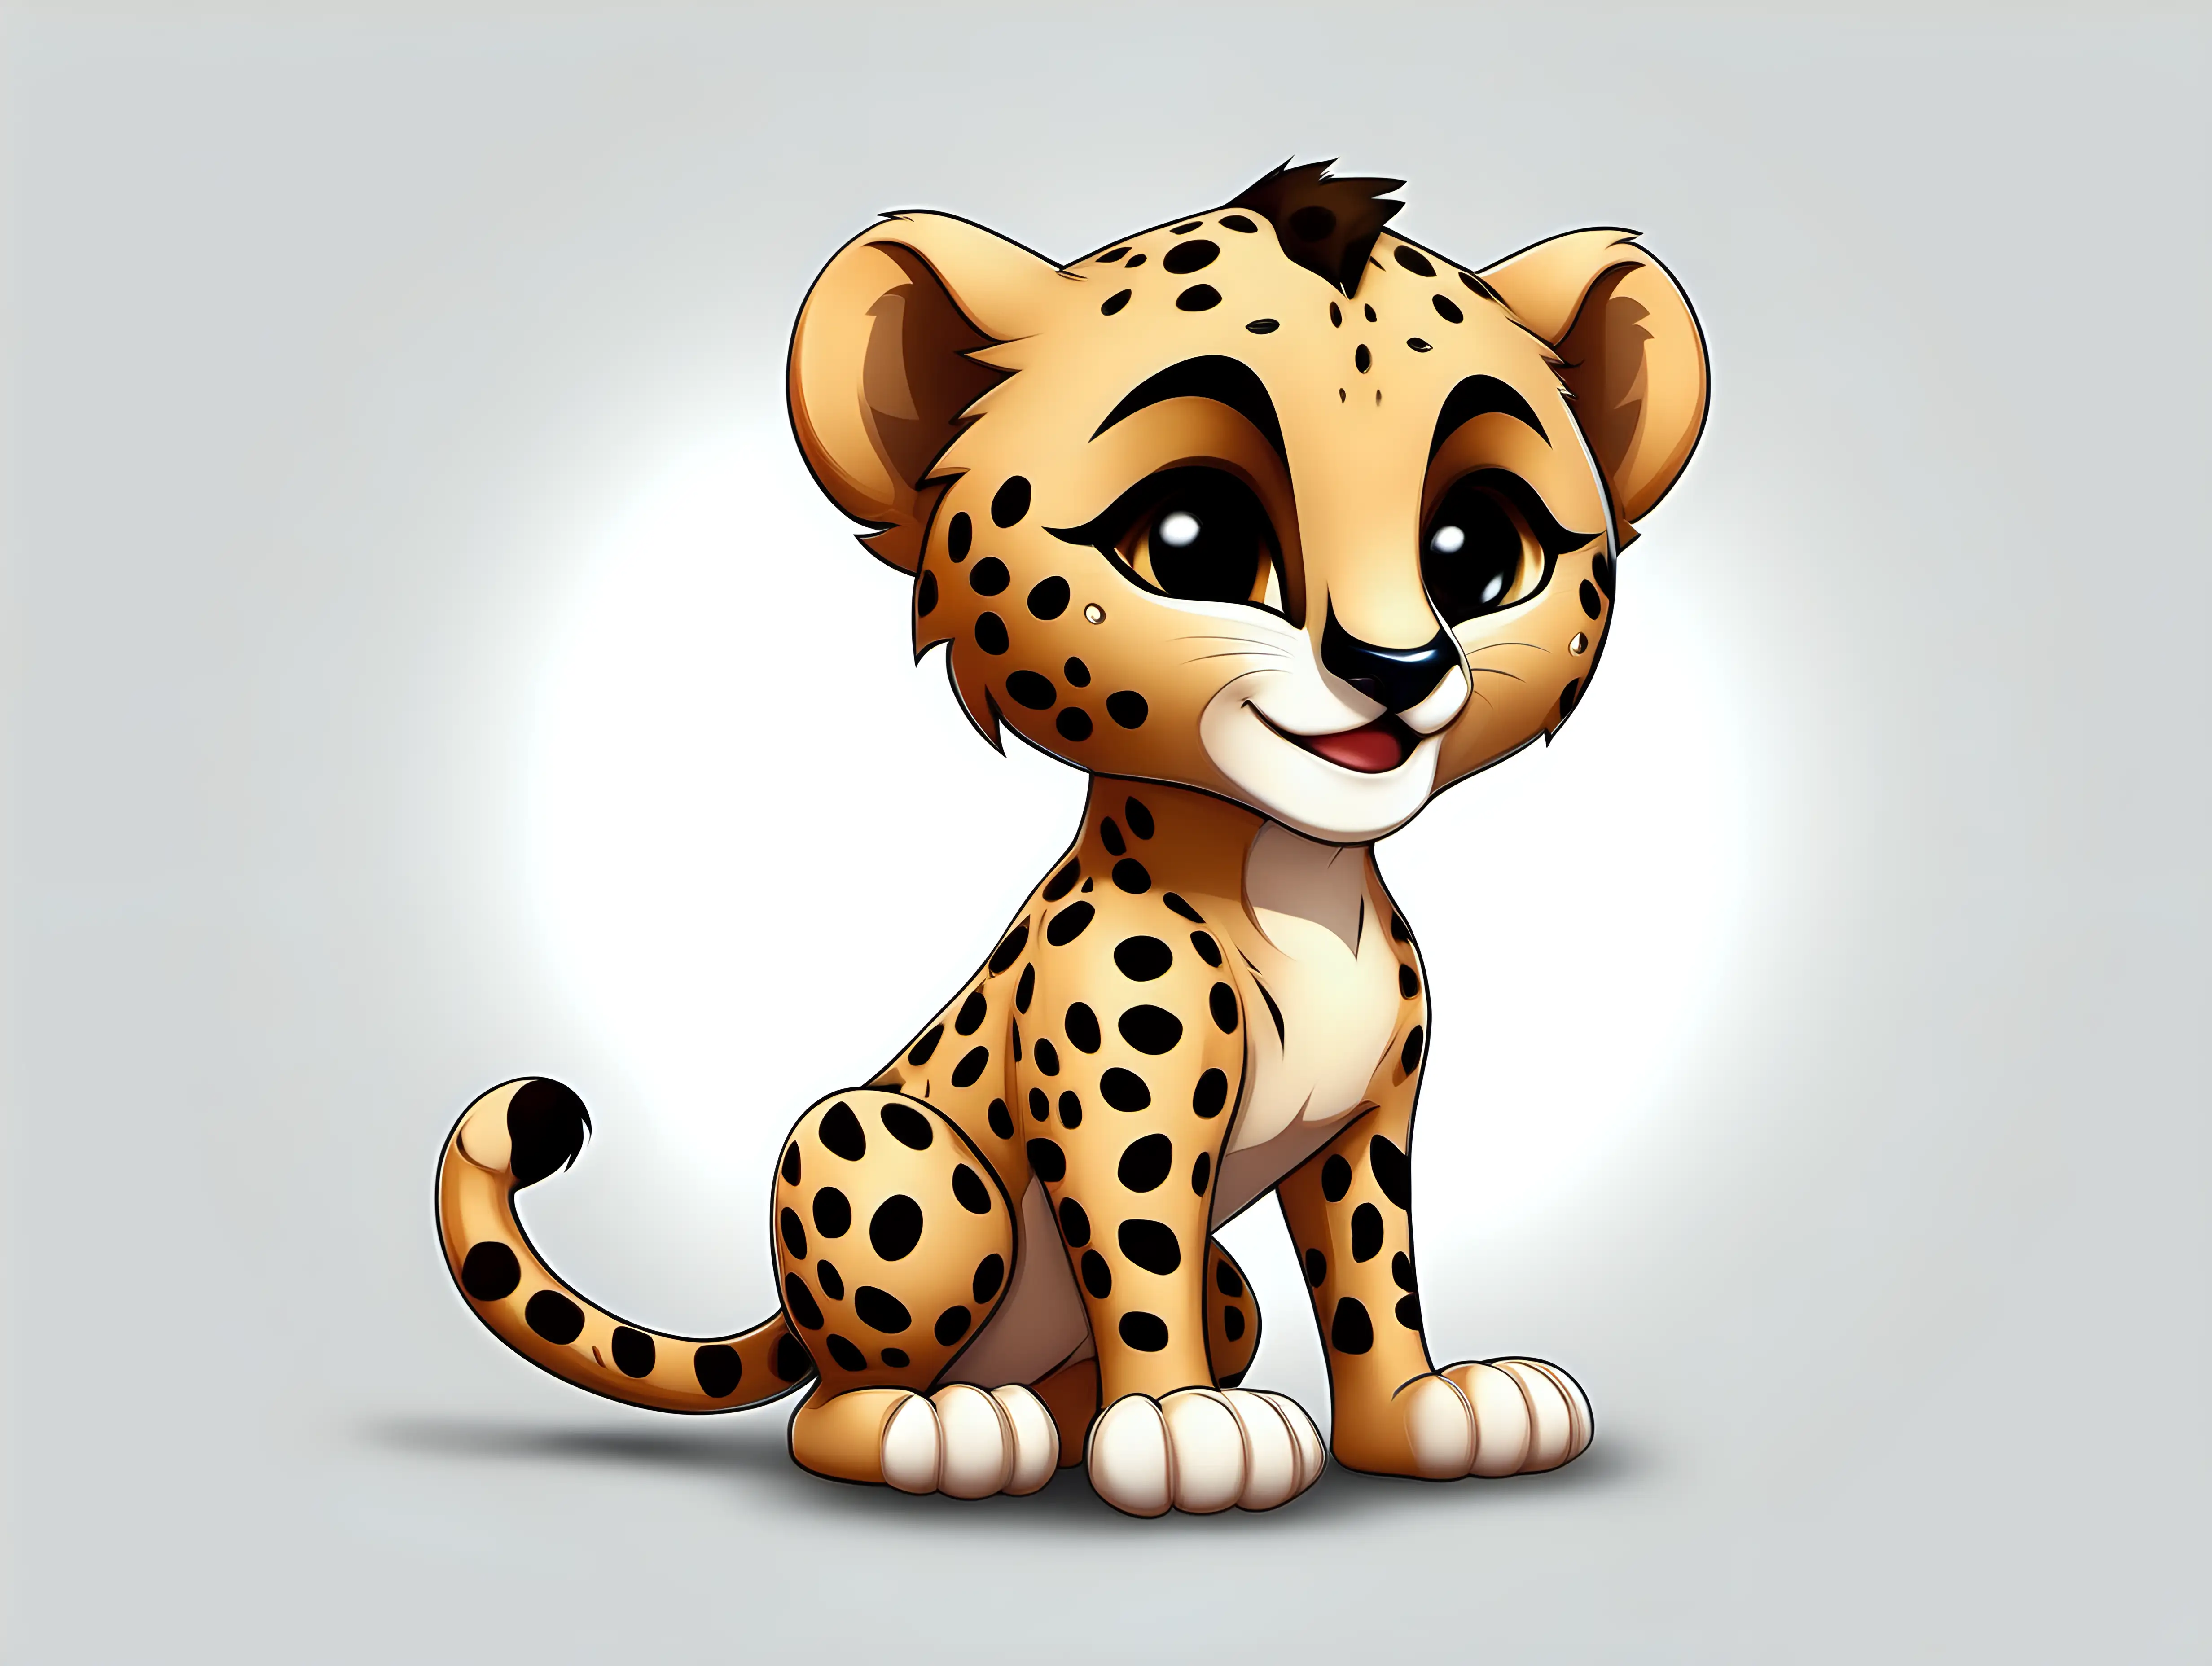 Friendly Animated Cartoon Baby Cheetah on White Background